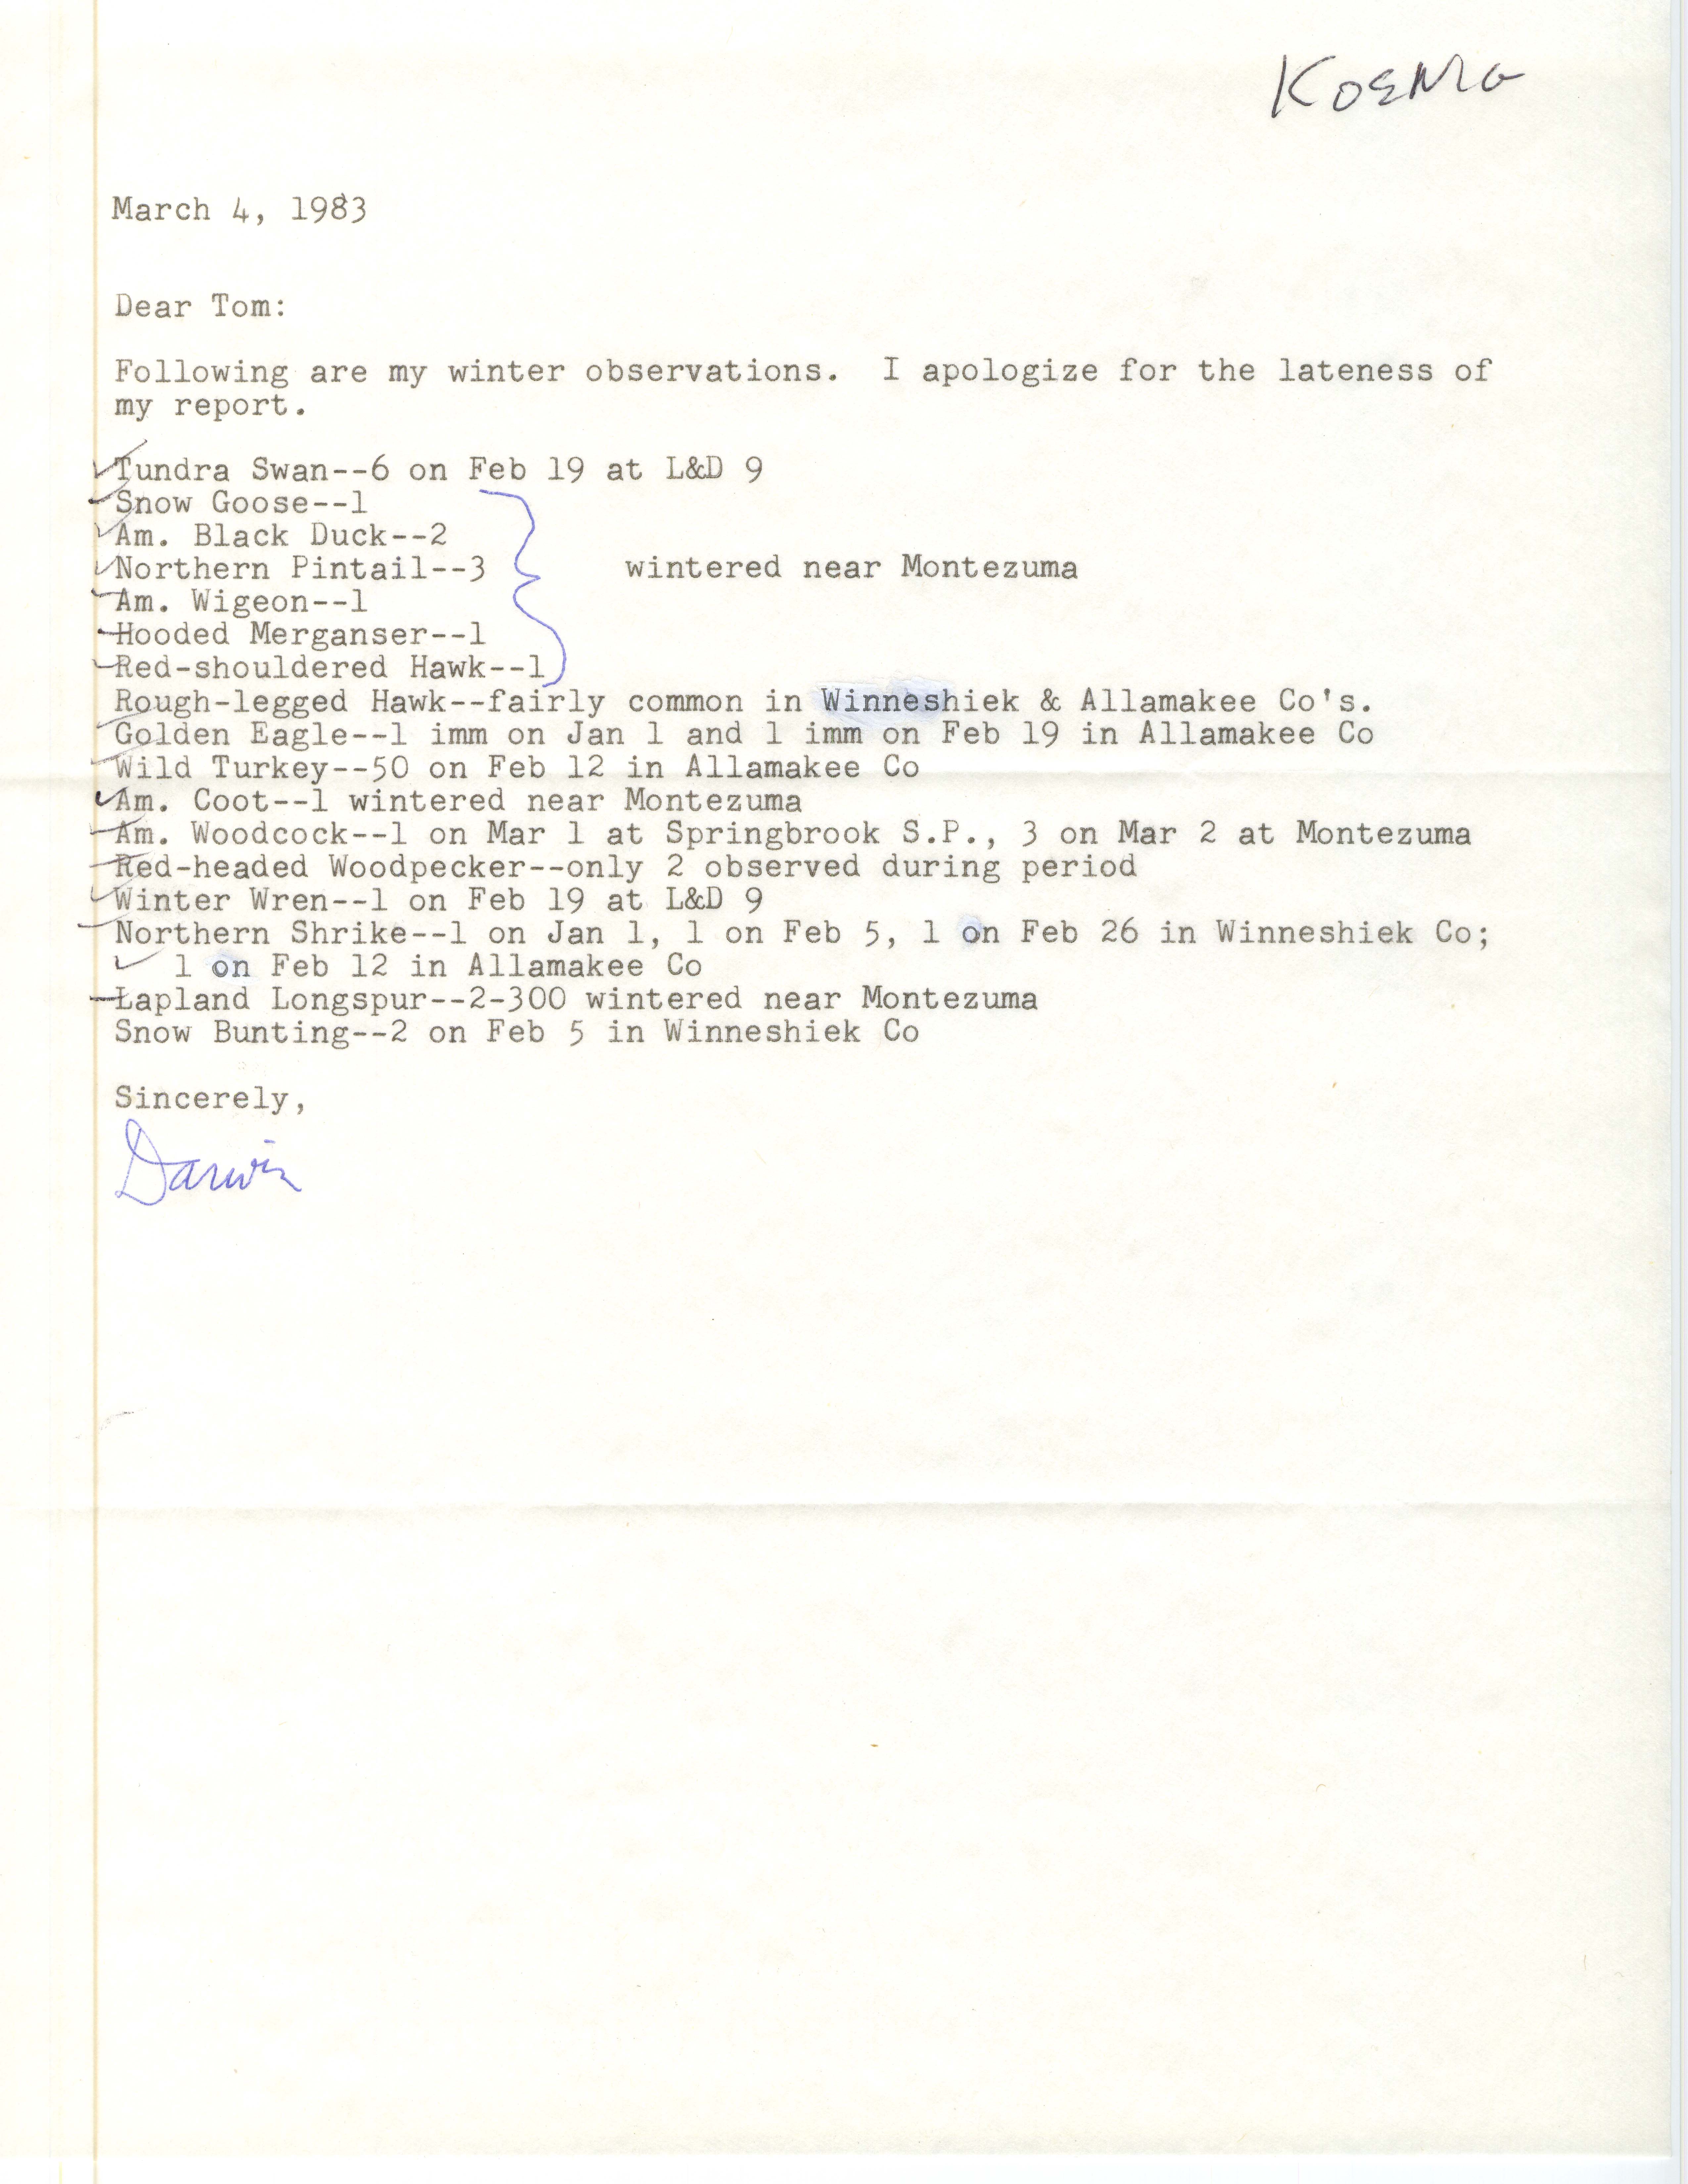 Darwin Koenig letter to Thomas H. Kent regarding winter bird sightings, March 4, 1983